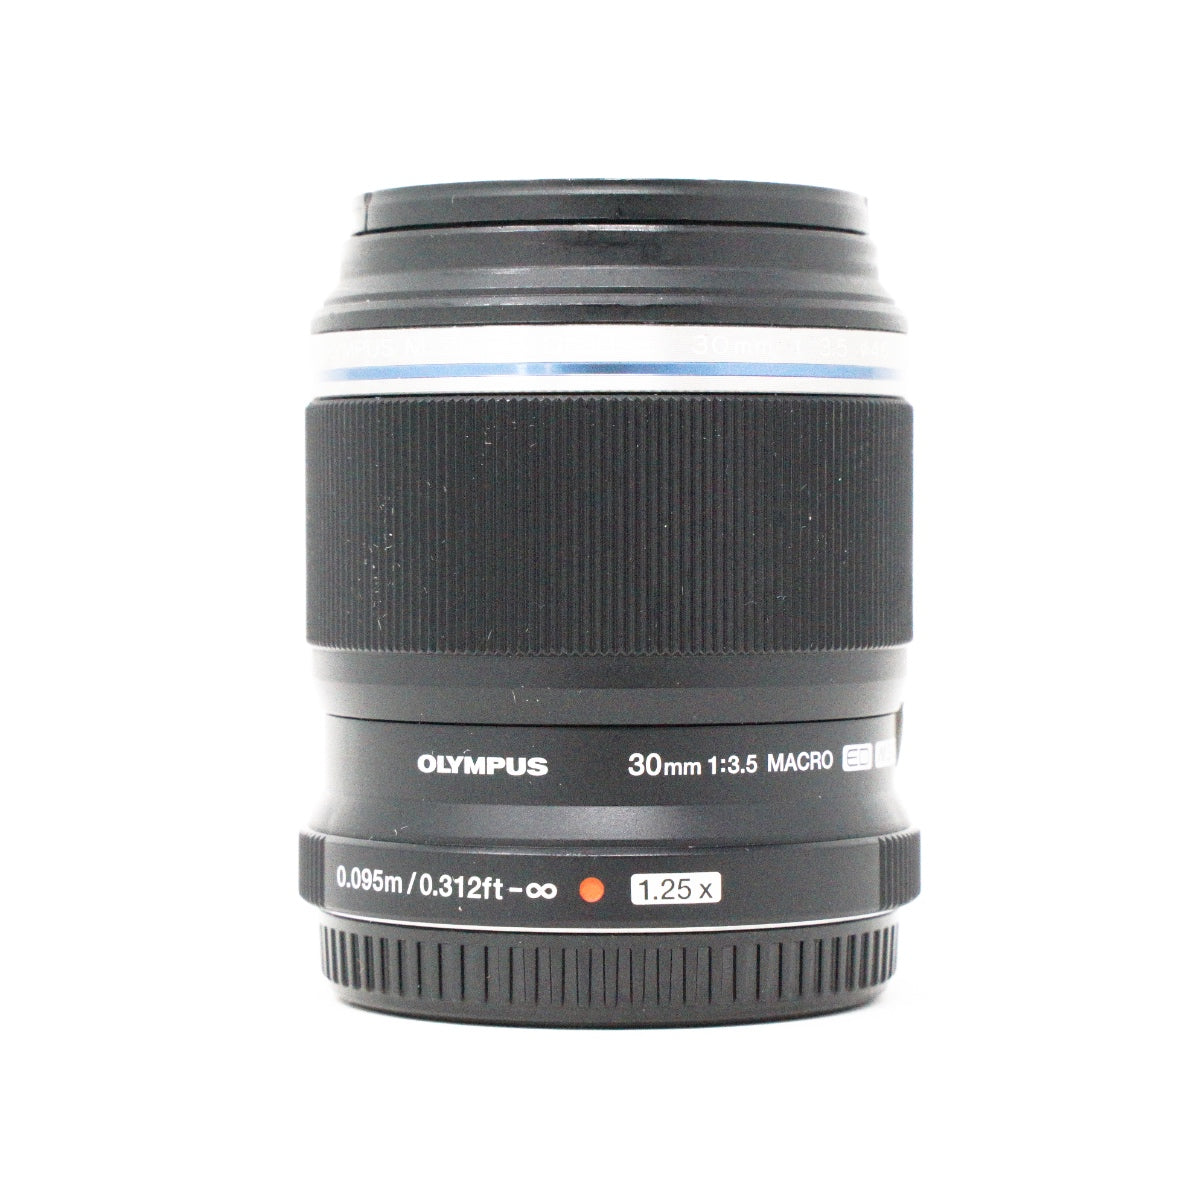 Used Olympus M.Zuiko Digital 30mm F3.5 Macro lens